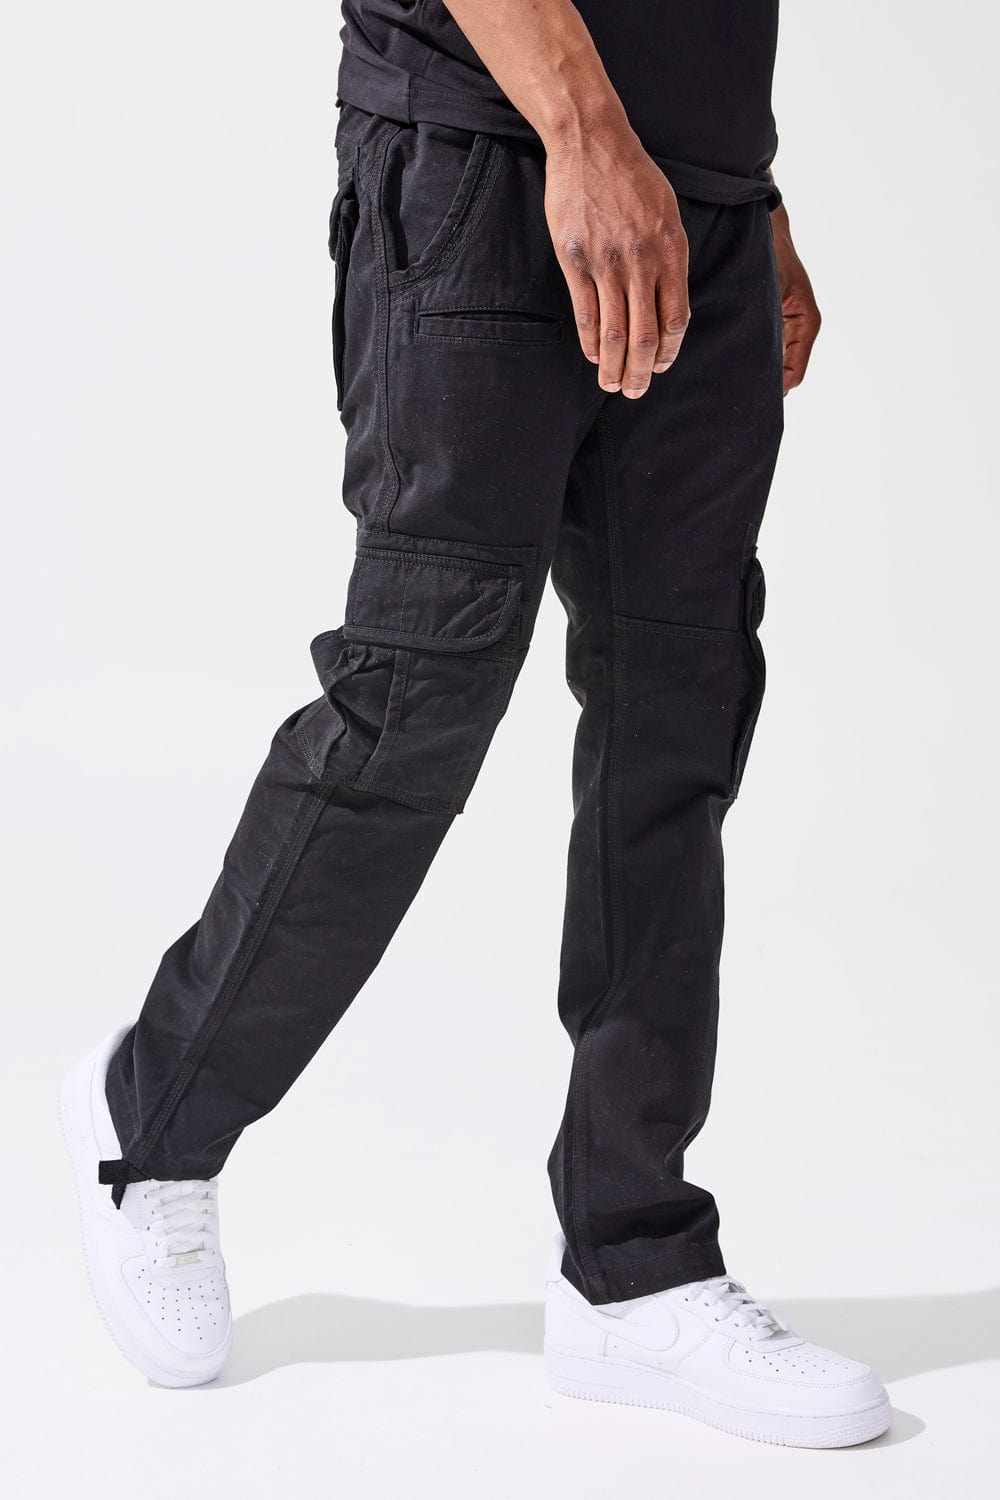 Mens Fashion Black Cargo Trousers Casual Hip Hop Harem Pencil Pants  Sweatpants  eBay